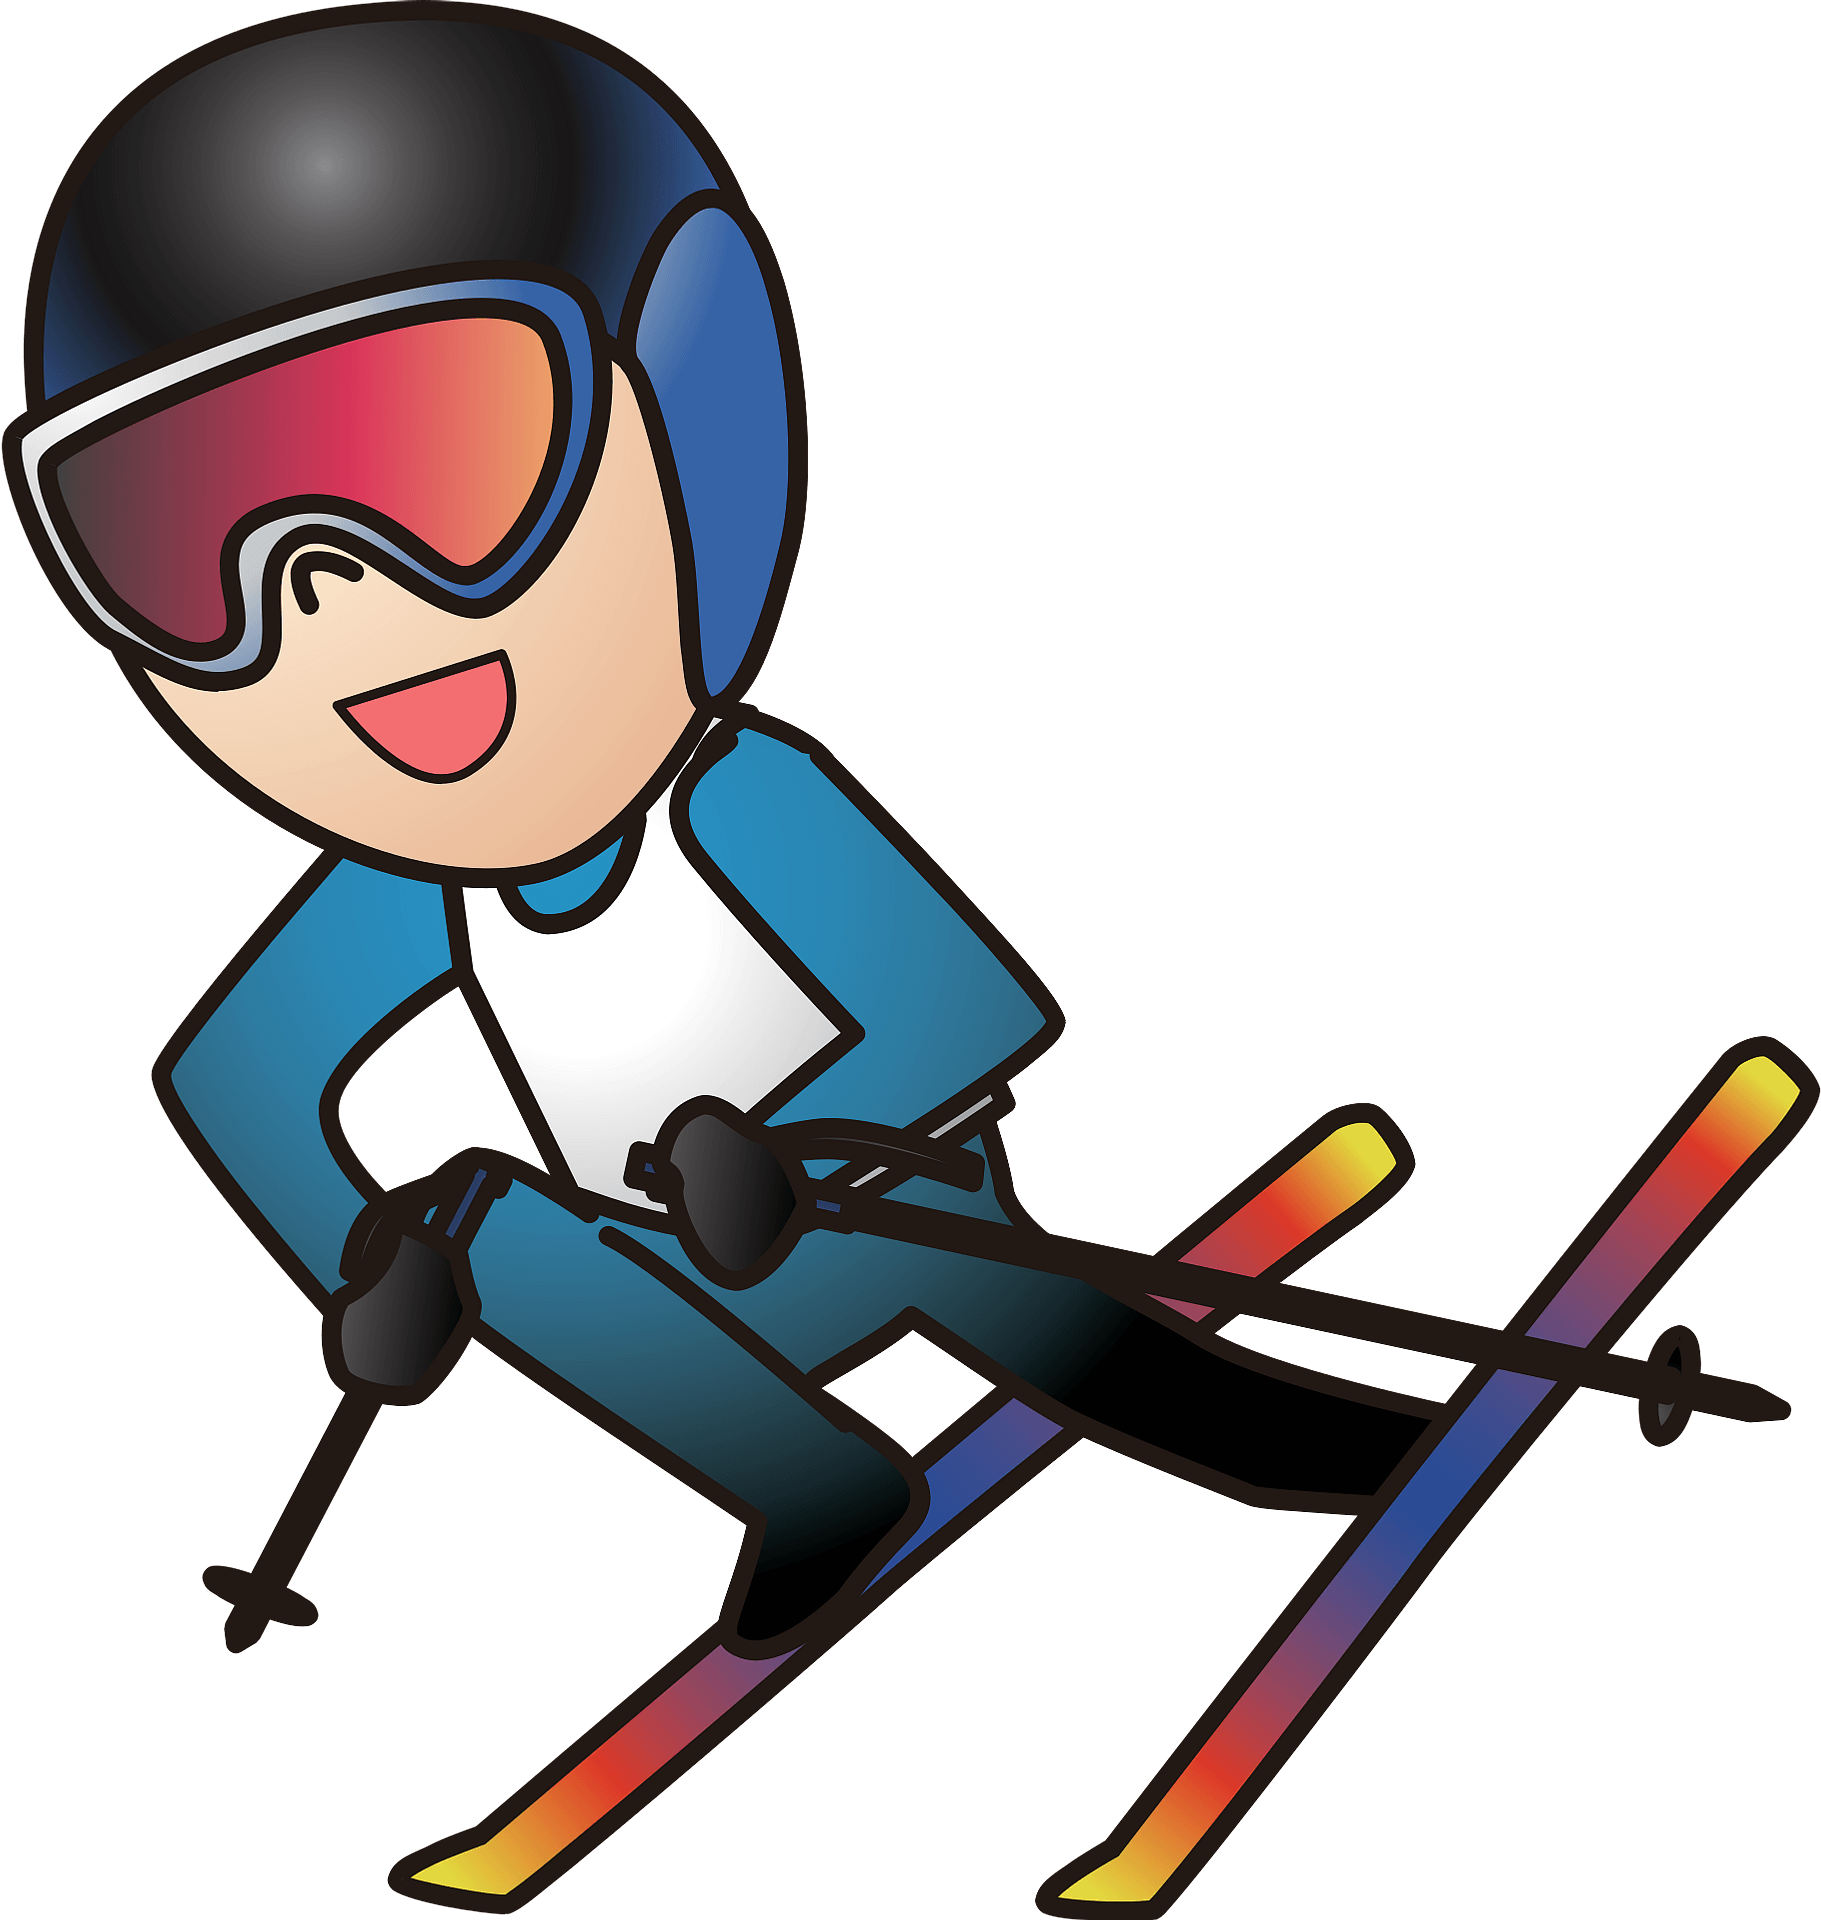 Winter Olympics - Alpine skiing | Winter Sports | Alpine skiing - Clip ...